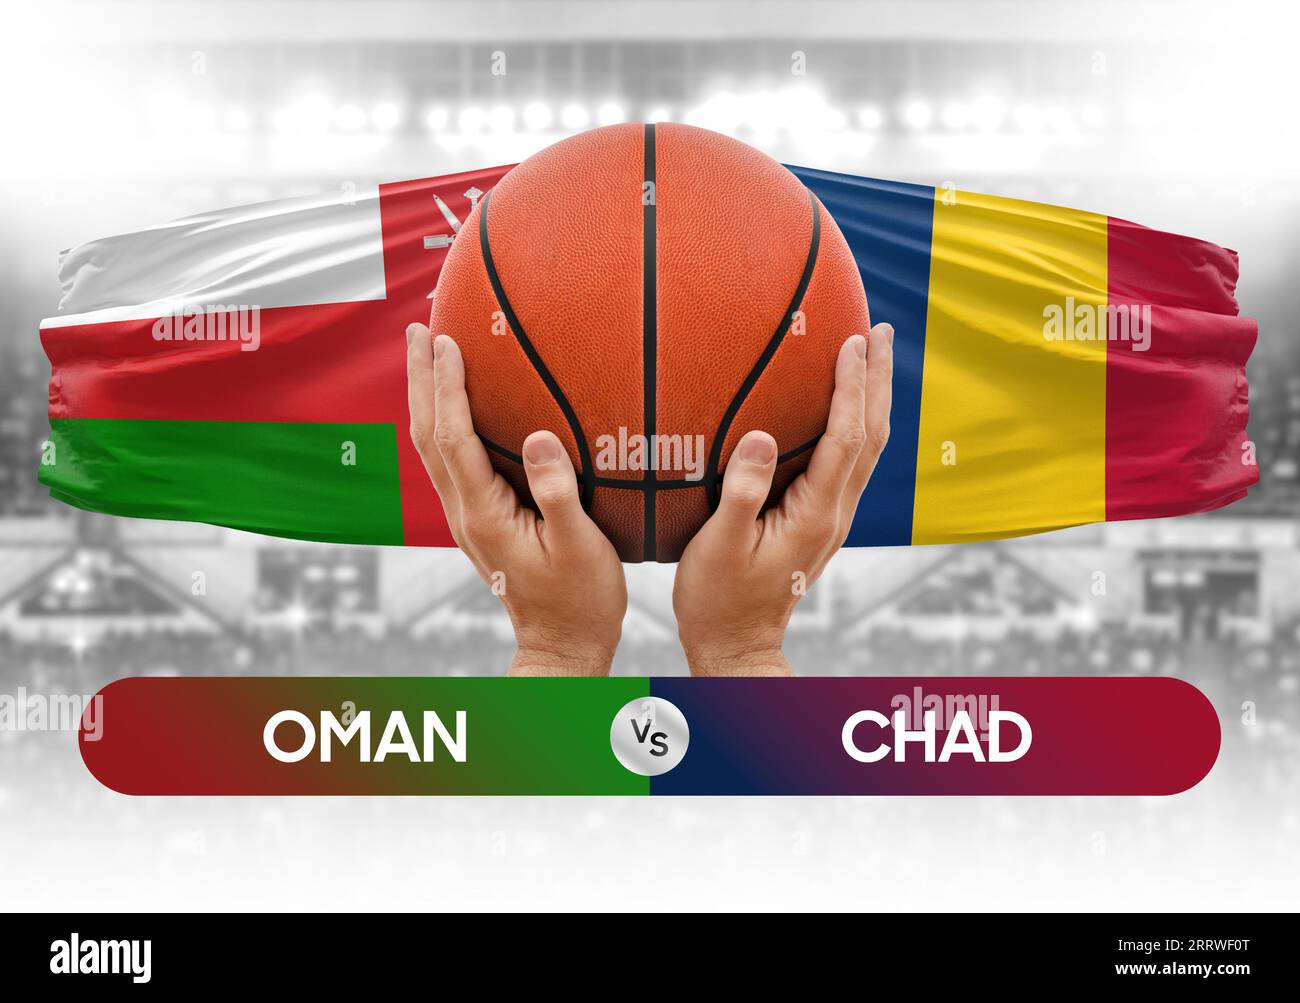 Oman vs Chad national basketball teams basket ball match competition cup concept image Stock Photo